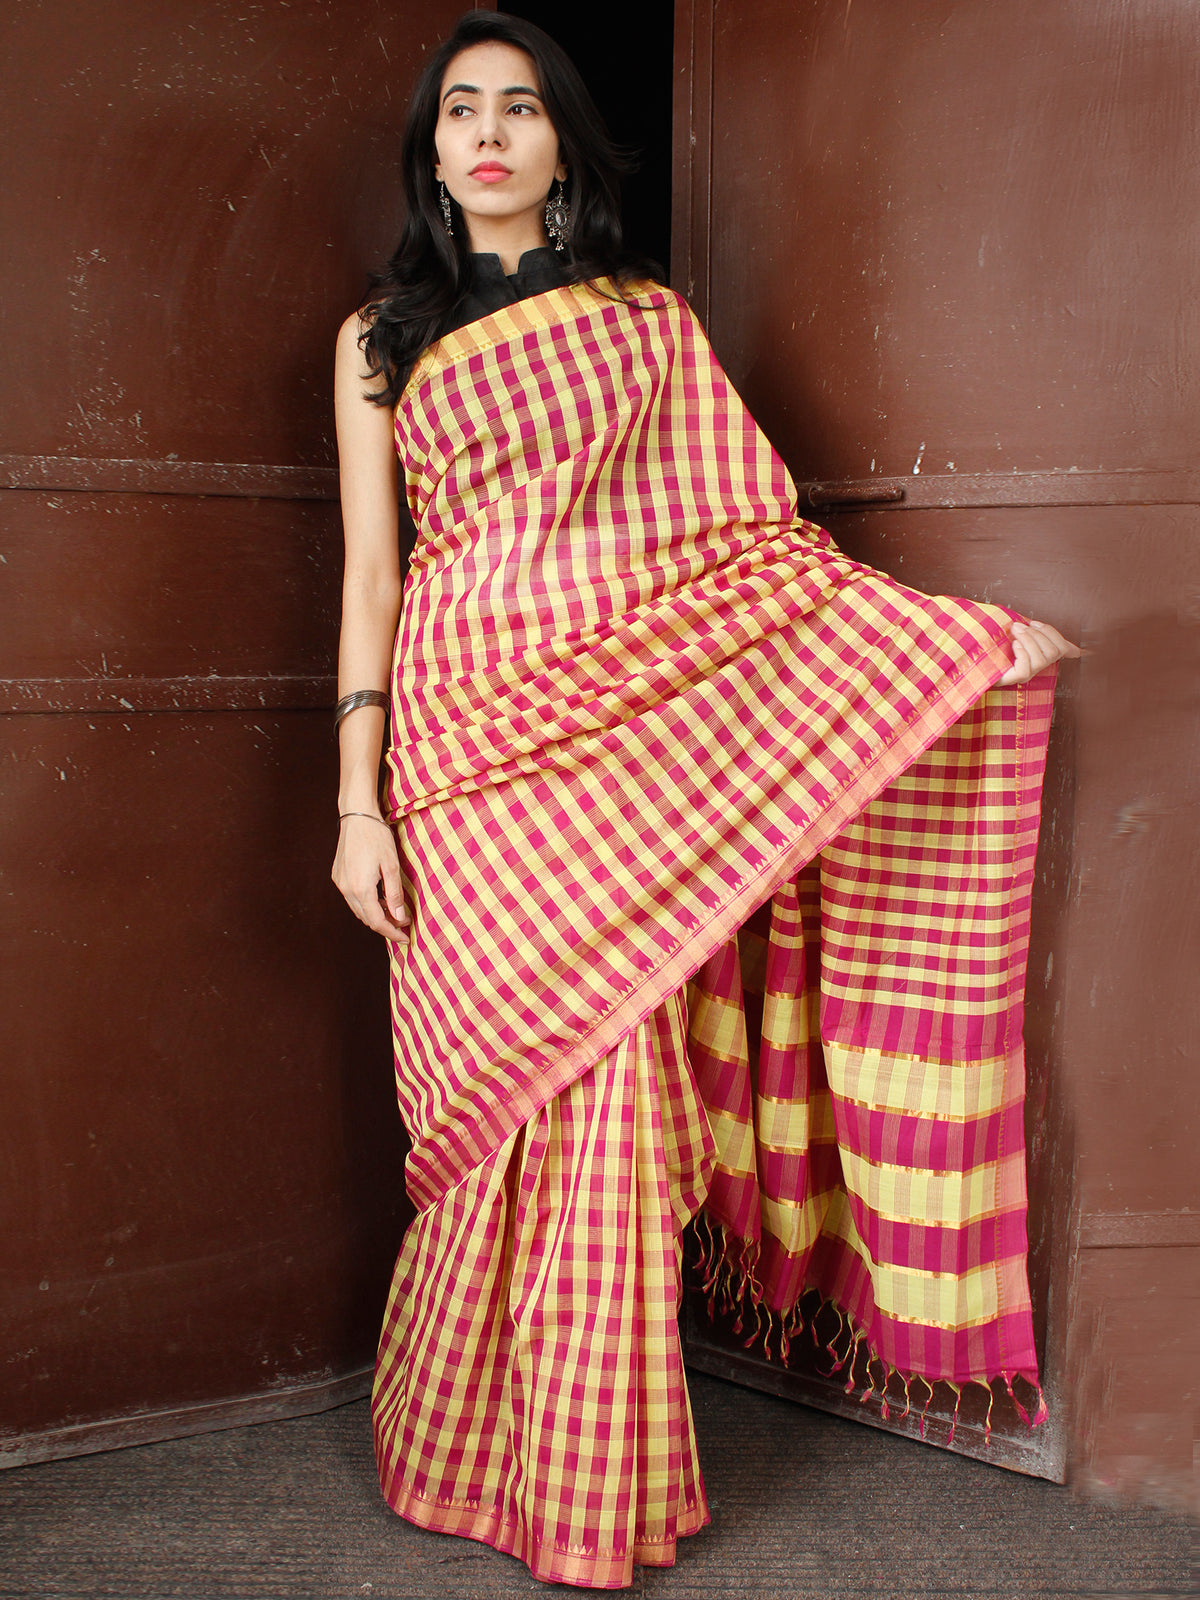 Pink Yellow Handloom Mangalagiri Cotton Saree With Zari Border - S031703684